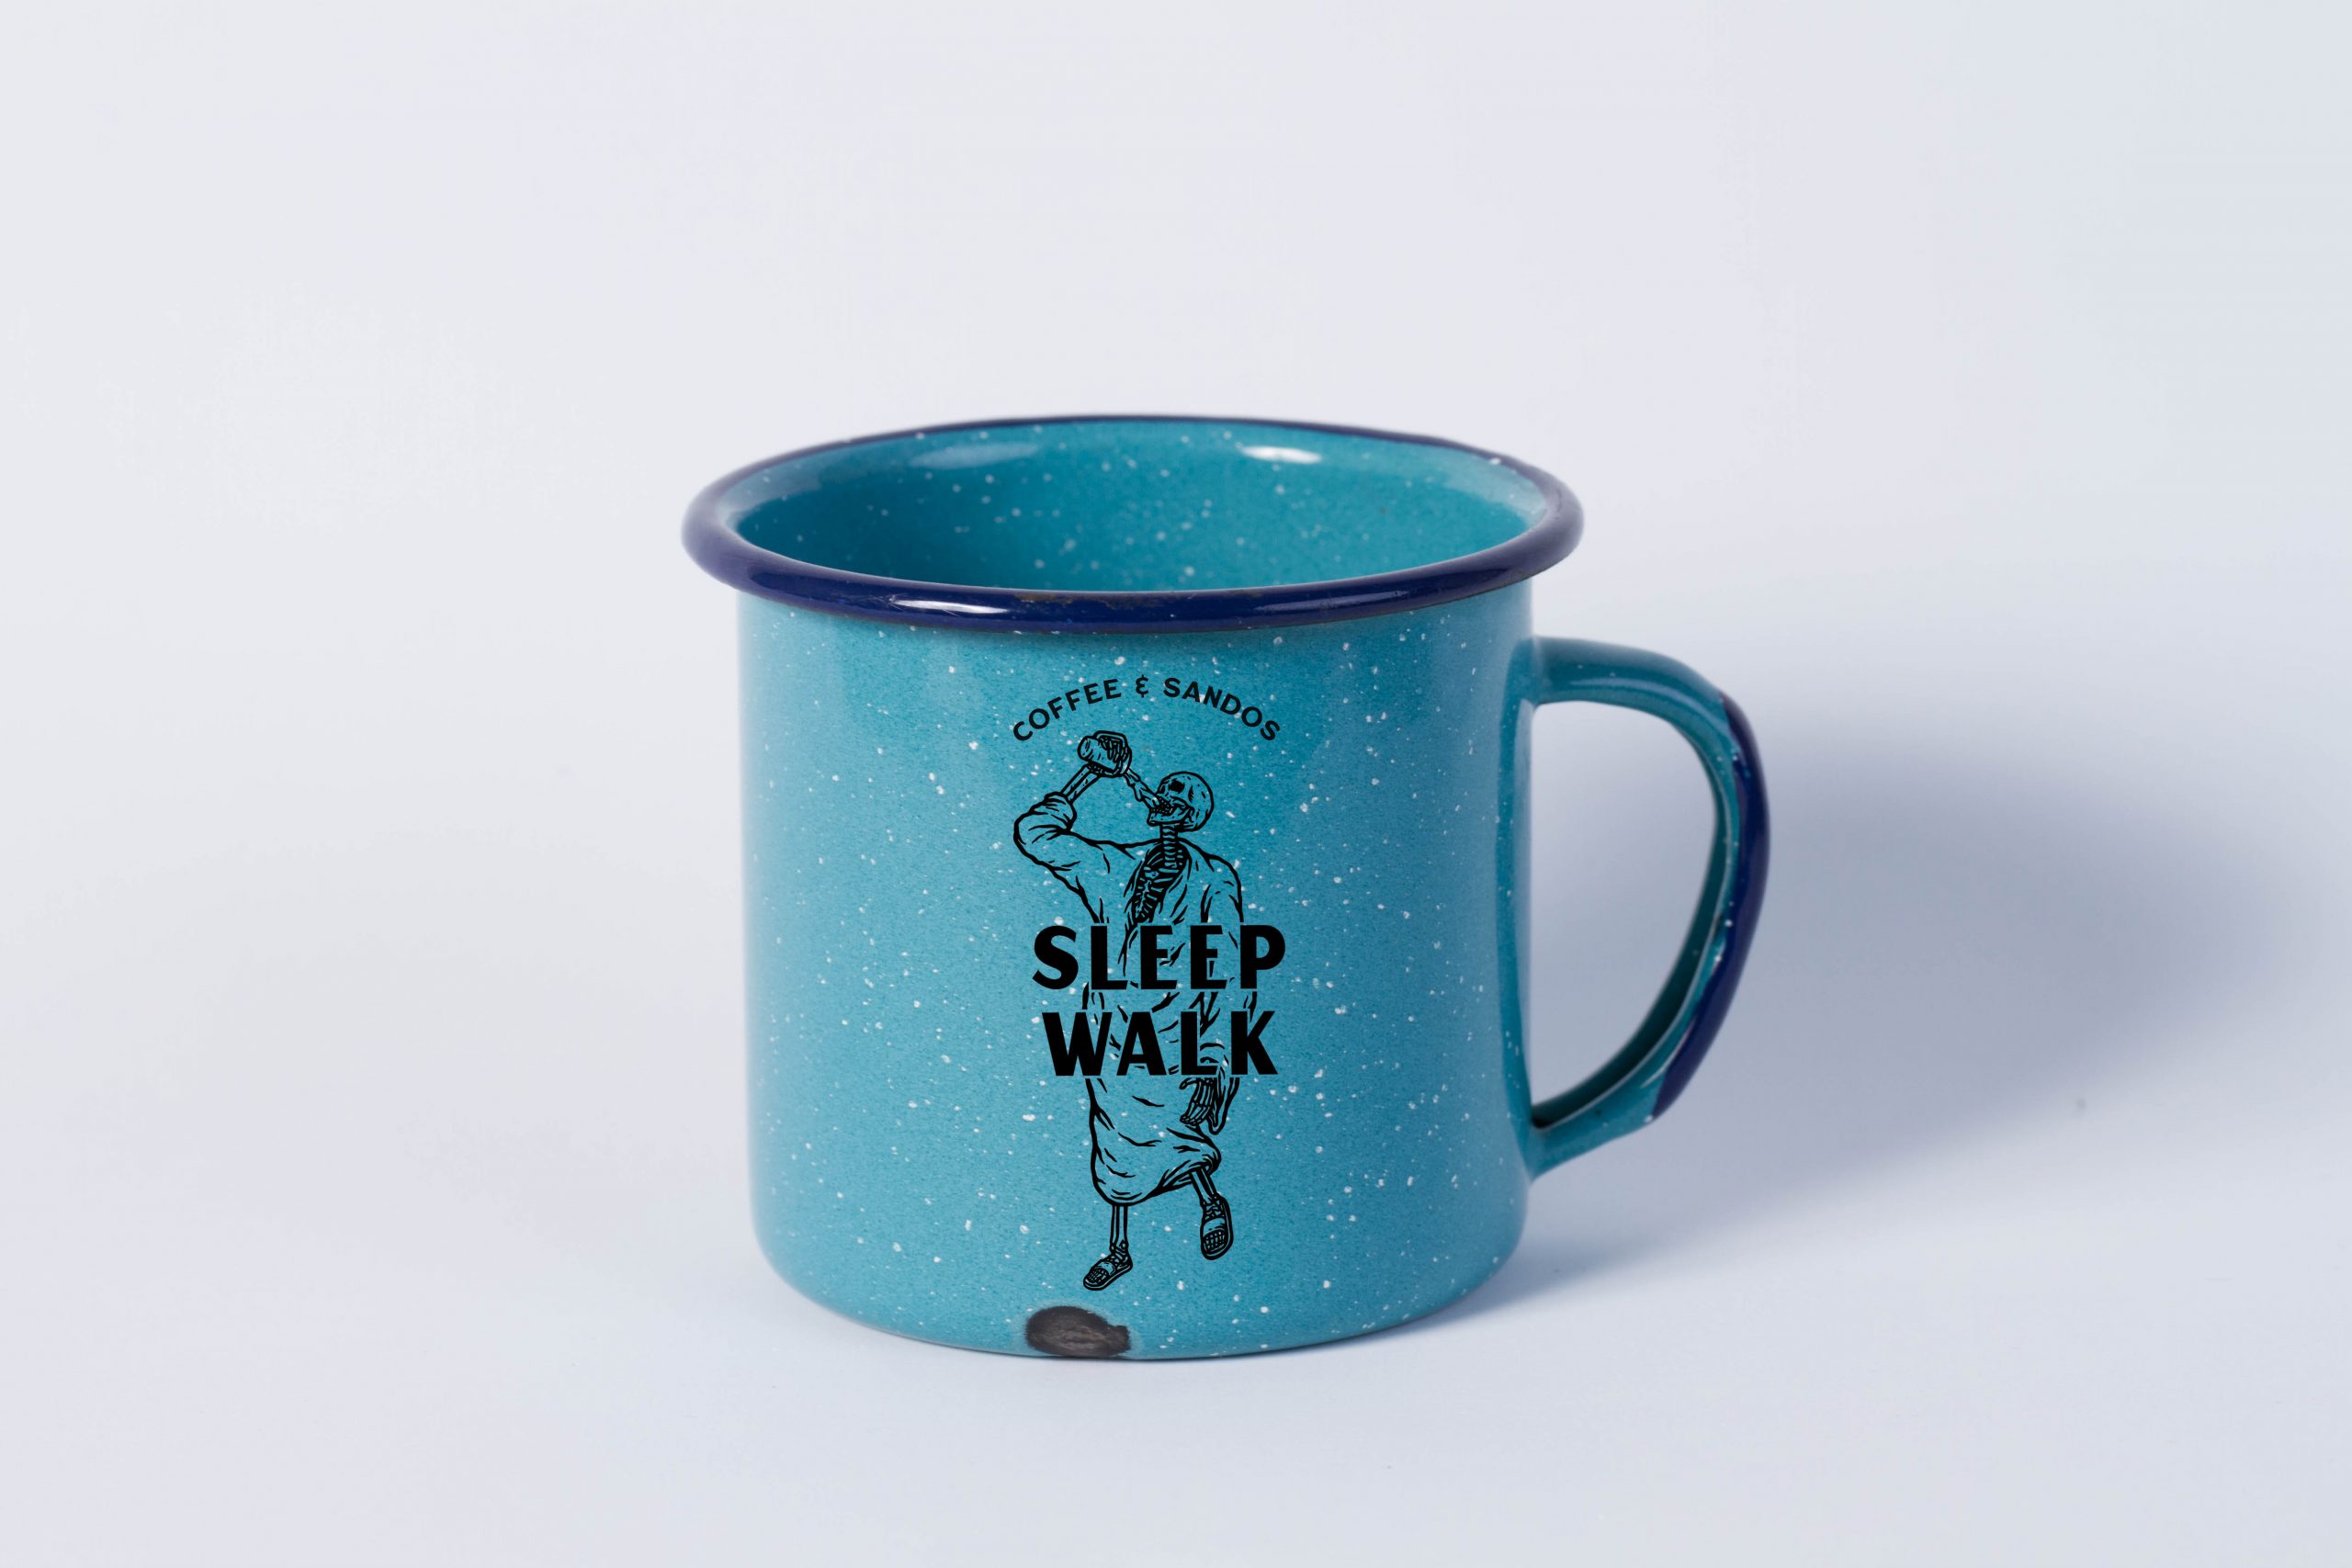 Sleepwalk logo on a camp mug